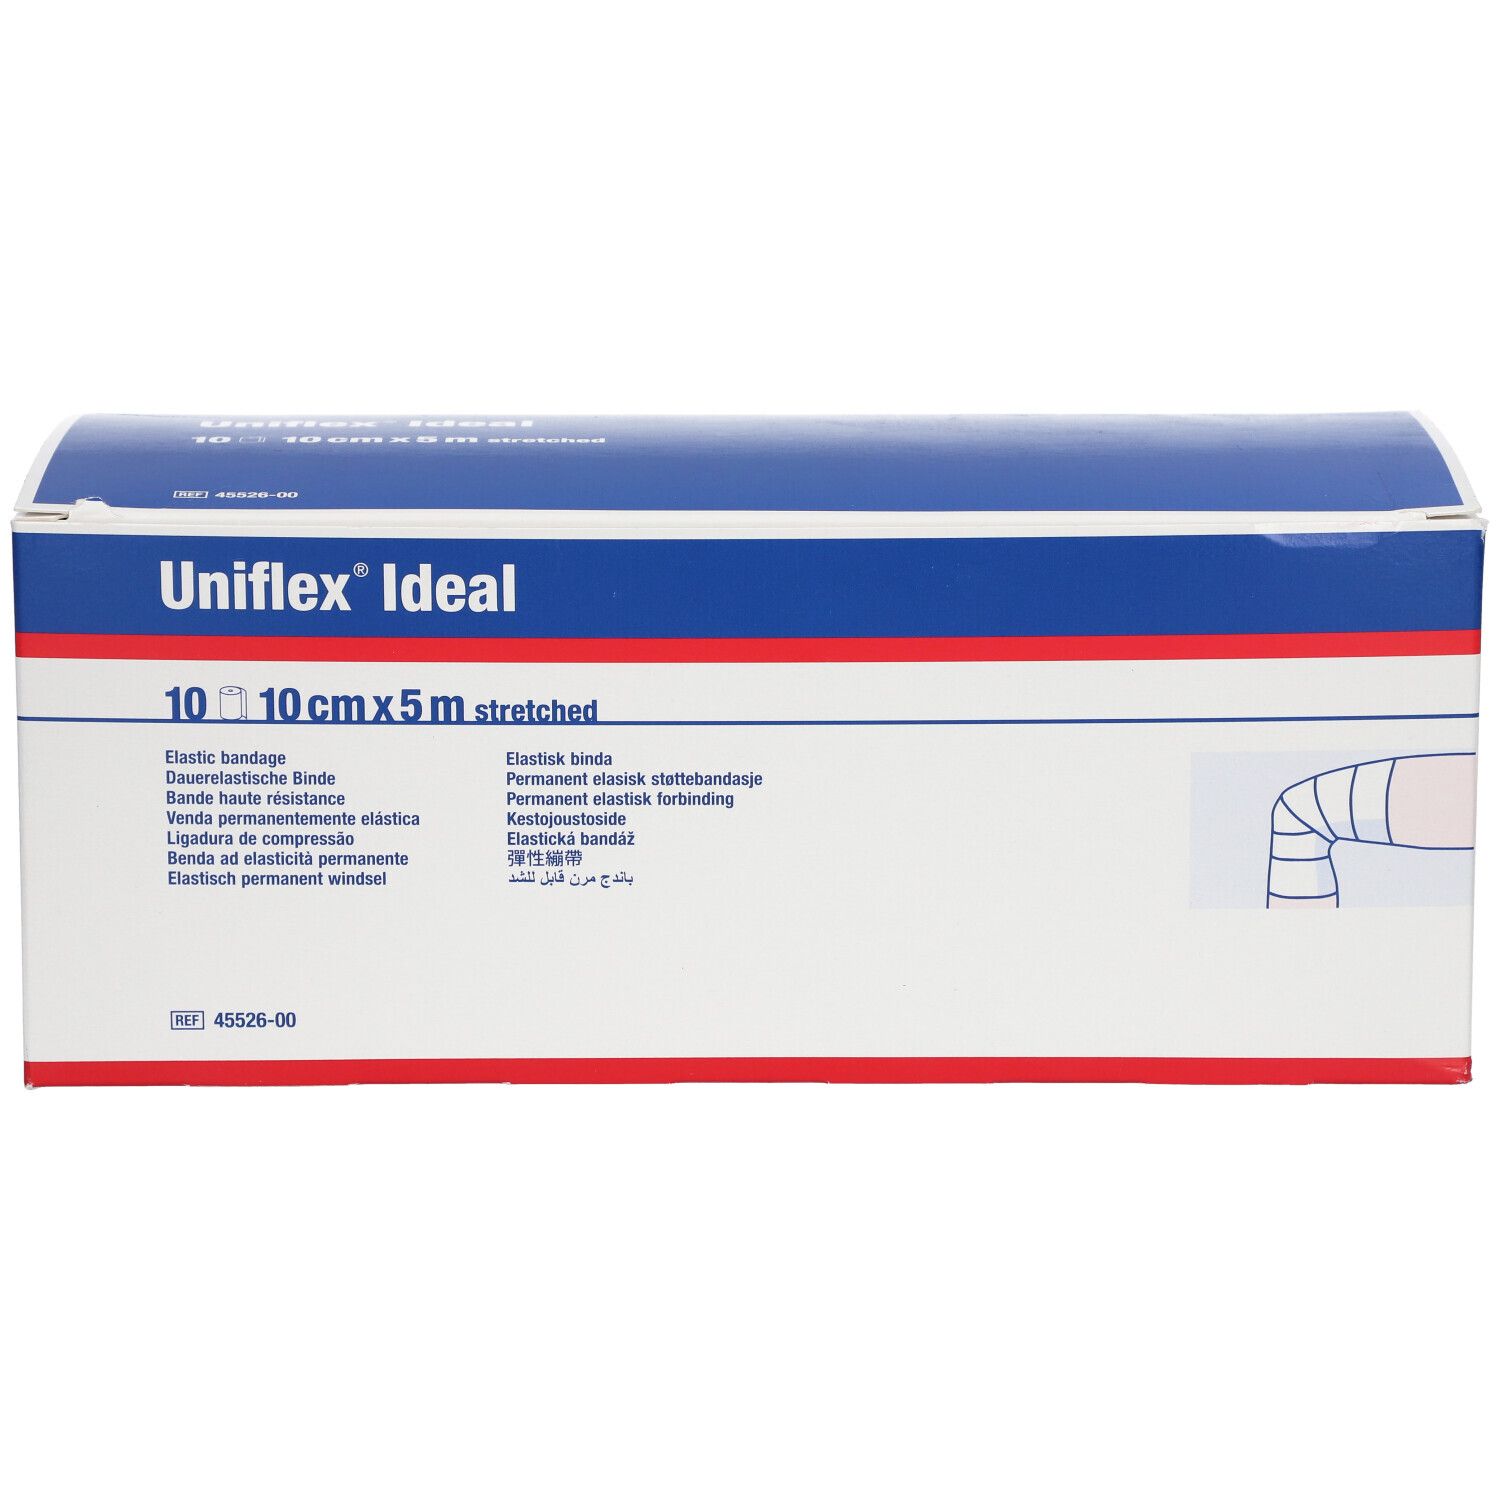 Uniflex® Ideal 10 cm x 5 m weiß